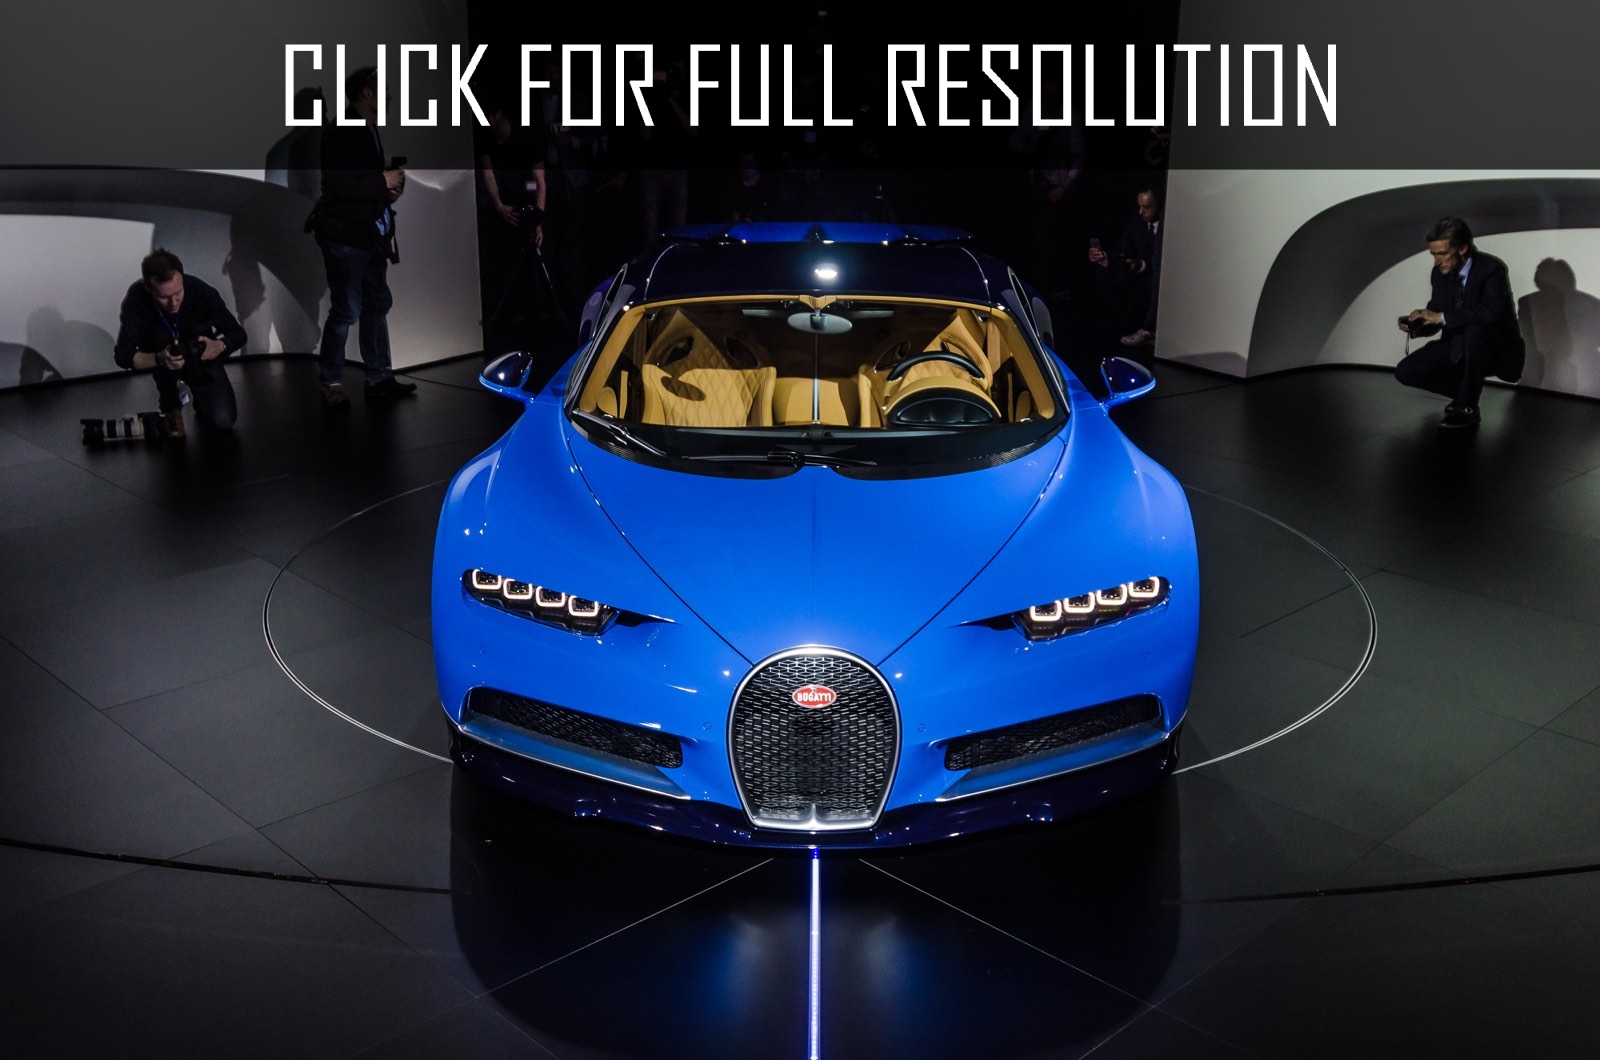 2019 Bugatti Chiron Gt